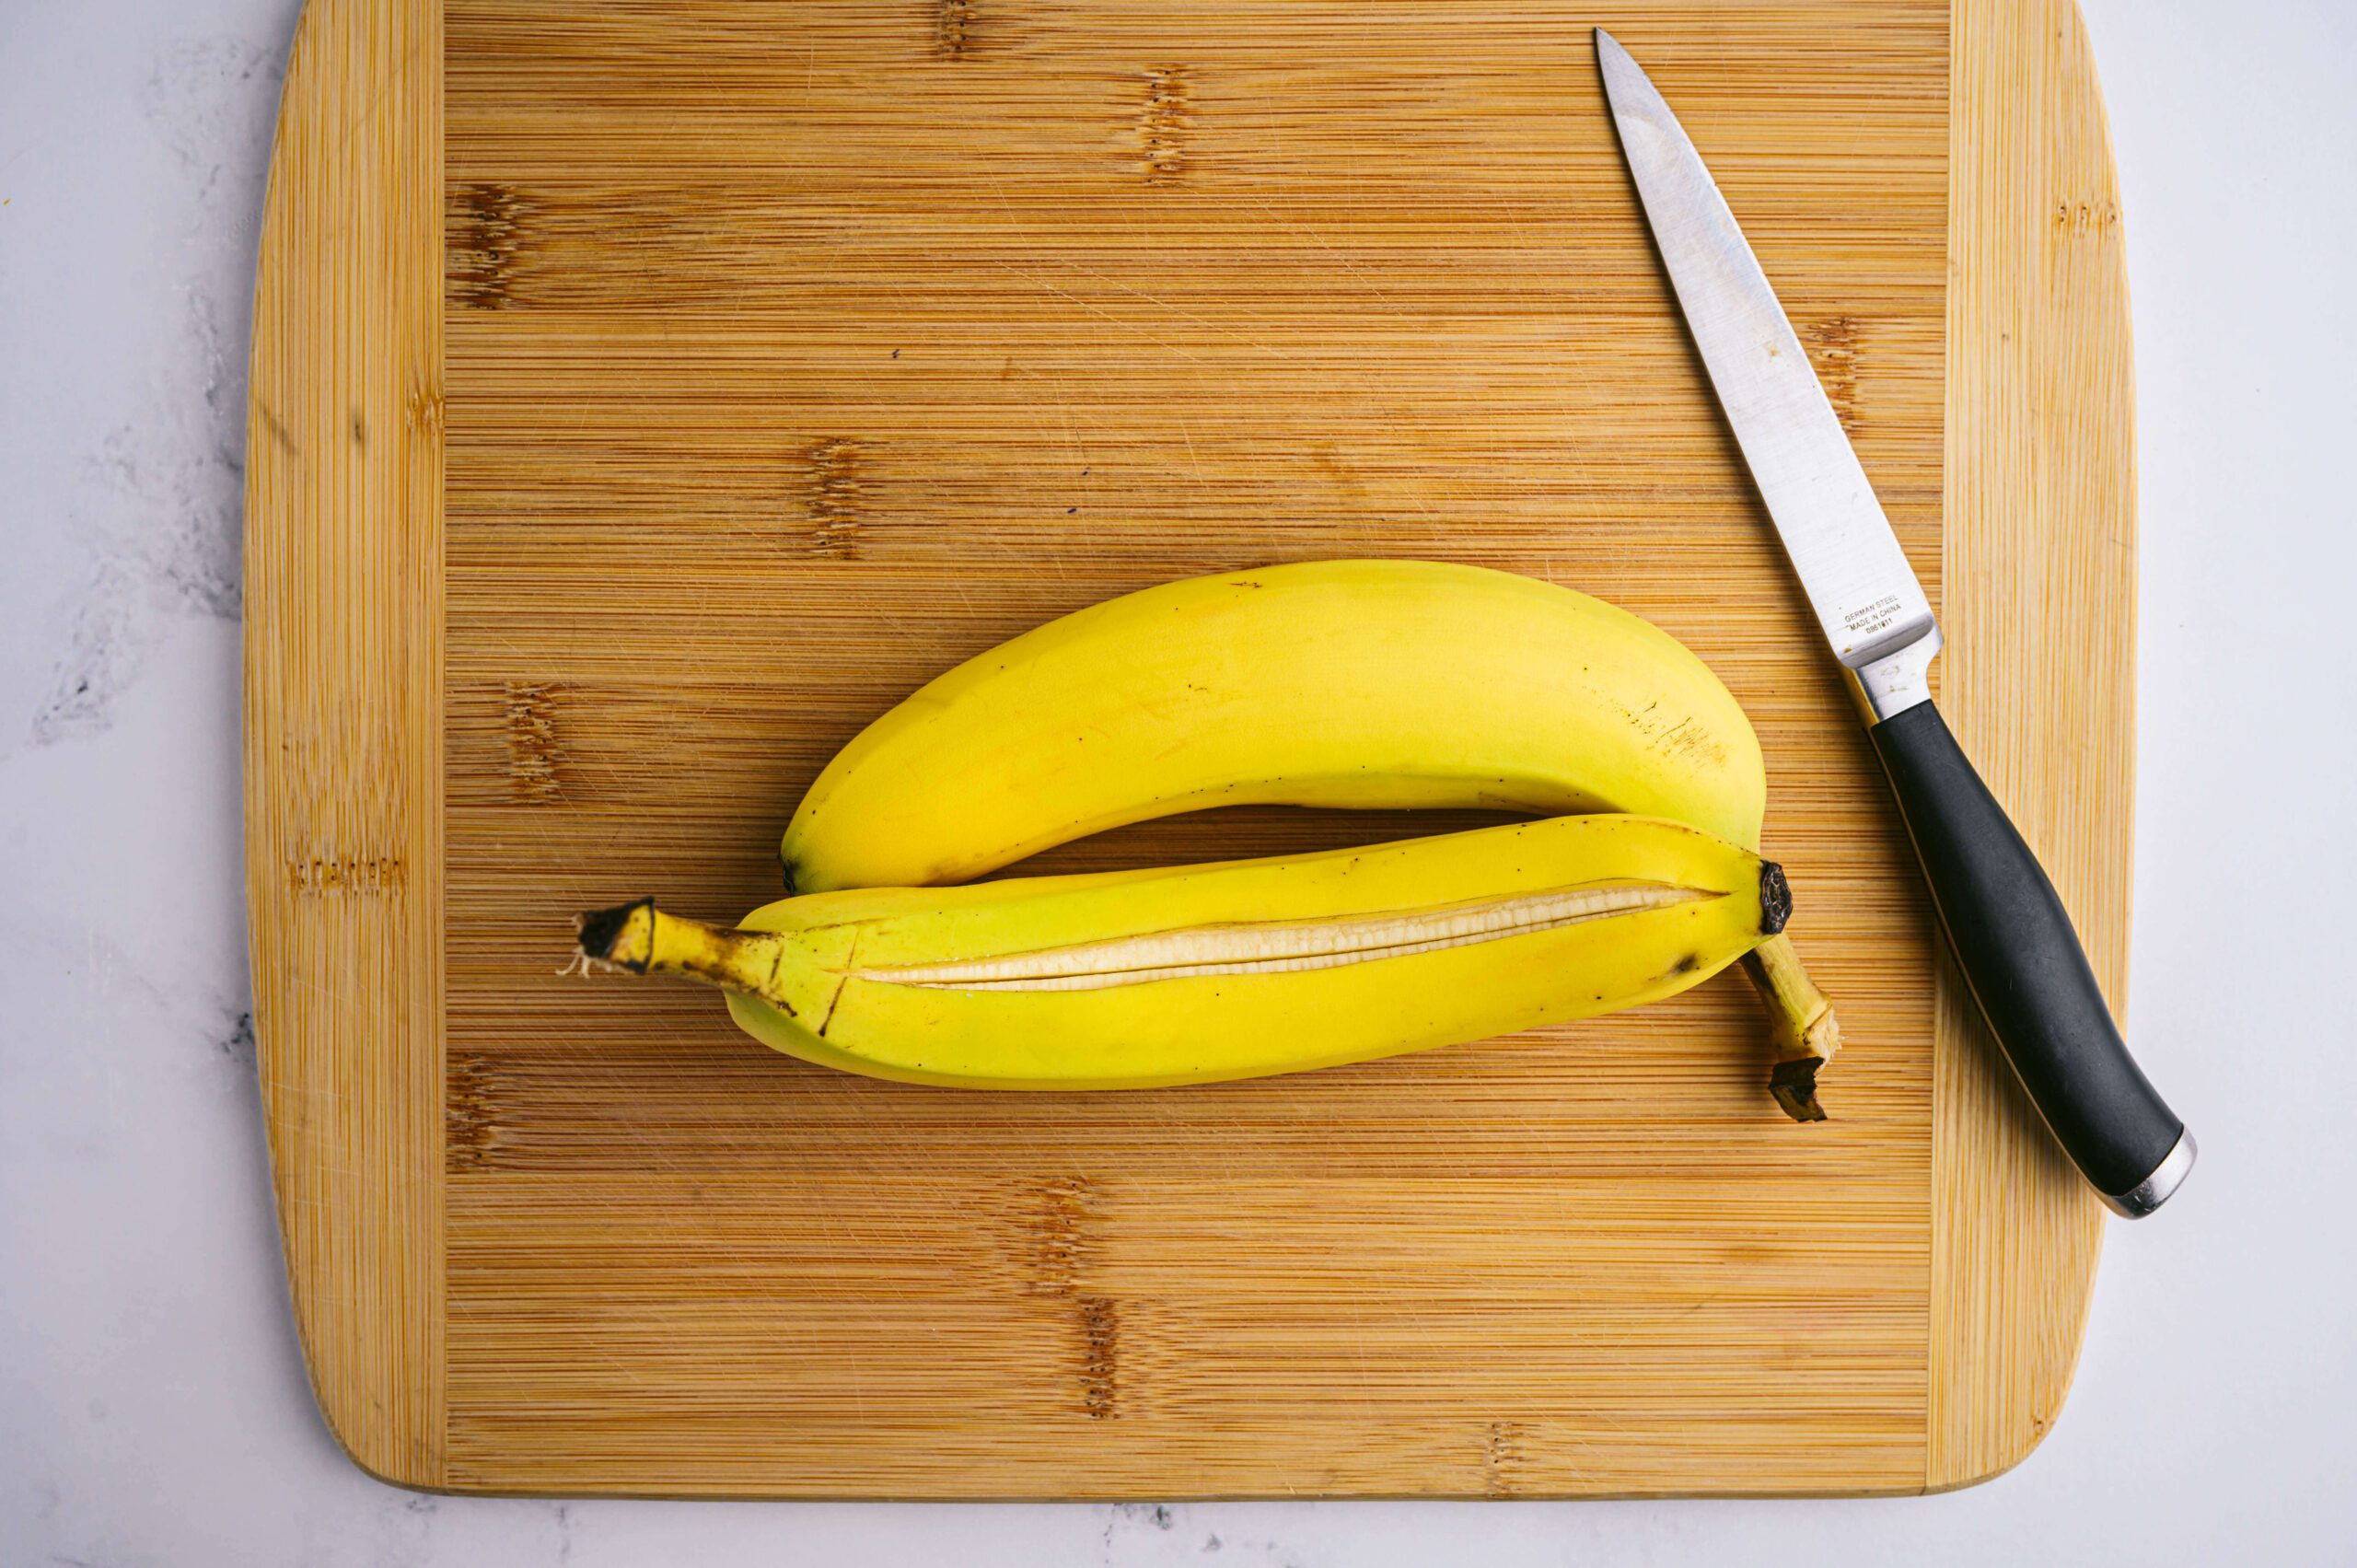 knife cutting through skin of a banana